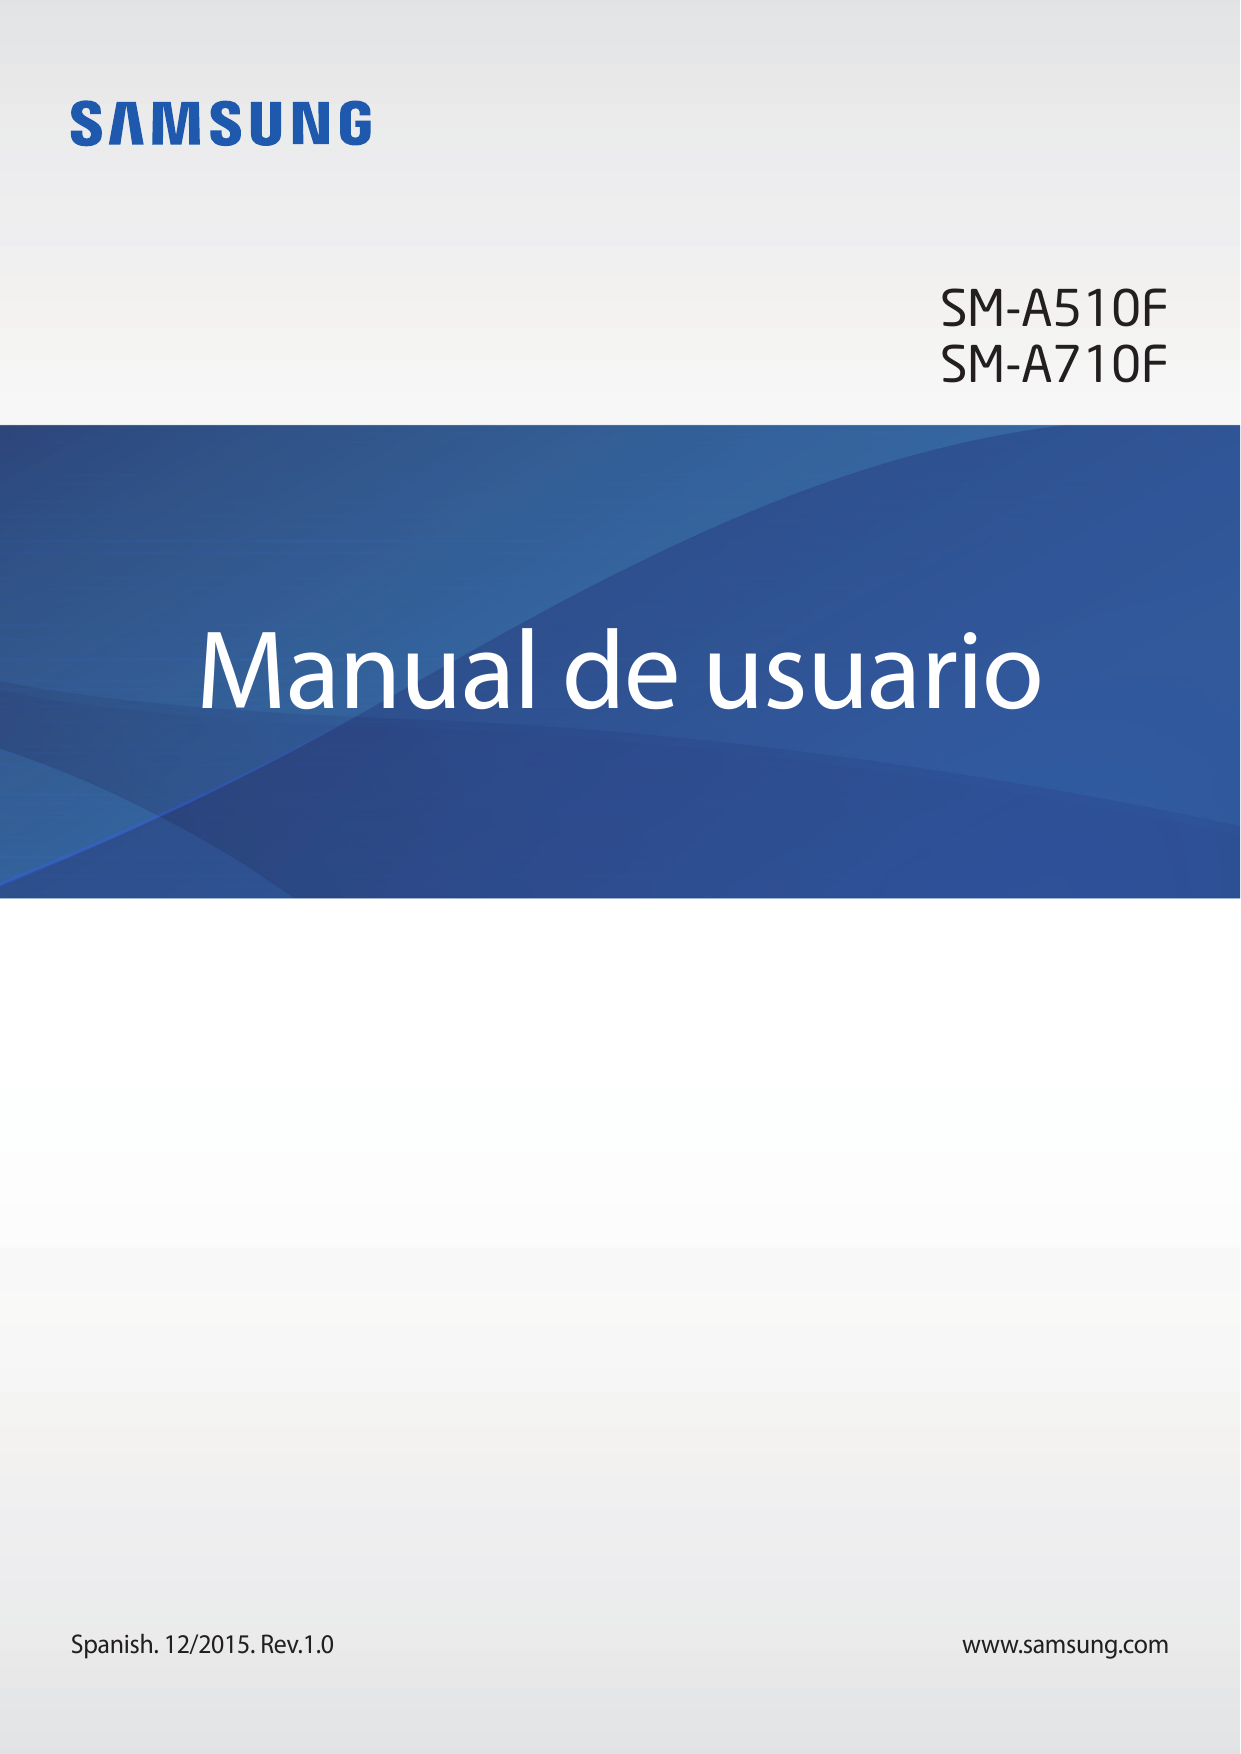 SM-A510FSM-A710FManual de usuarioSpanish. 12/2015. Rev.1.0www.samsung.com